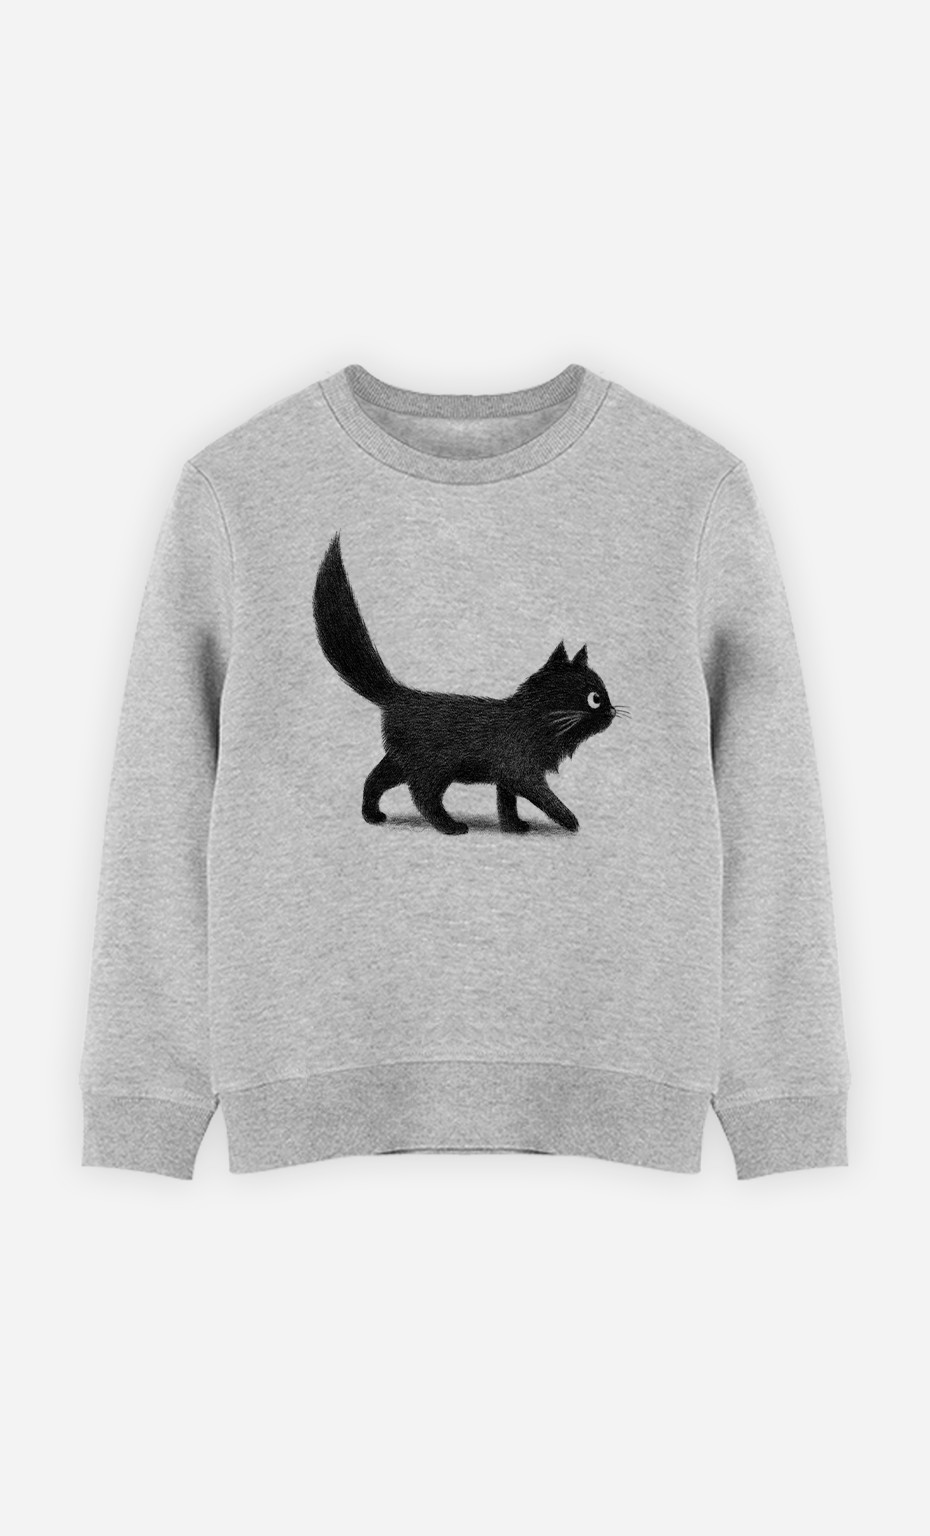 Kid Sweatshirt Creeping Cat